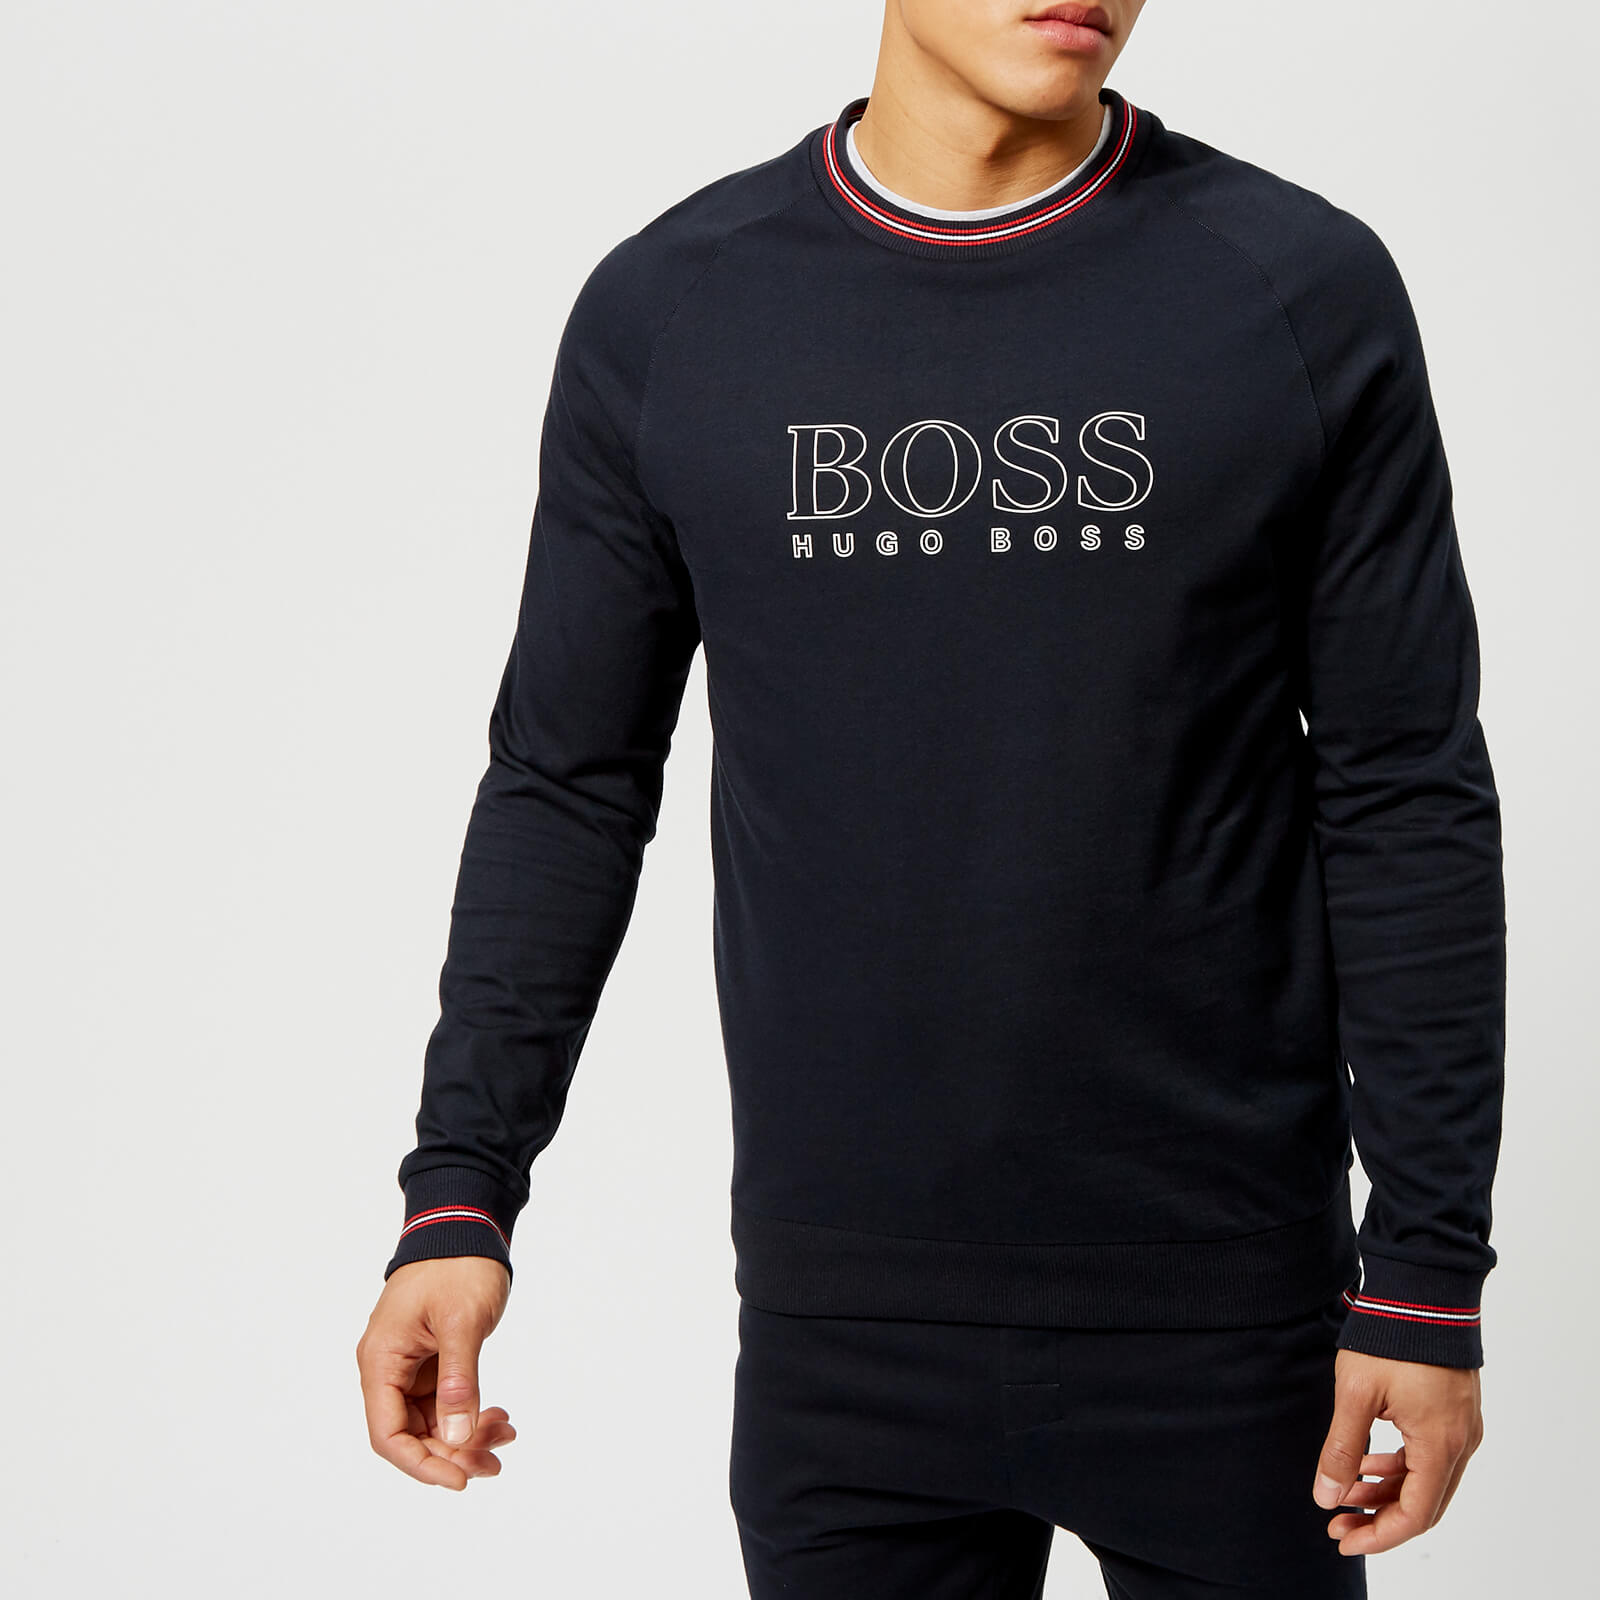 hugo boss sweater mens sale 